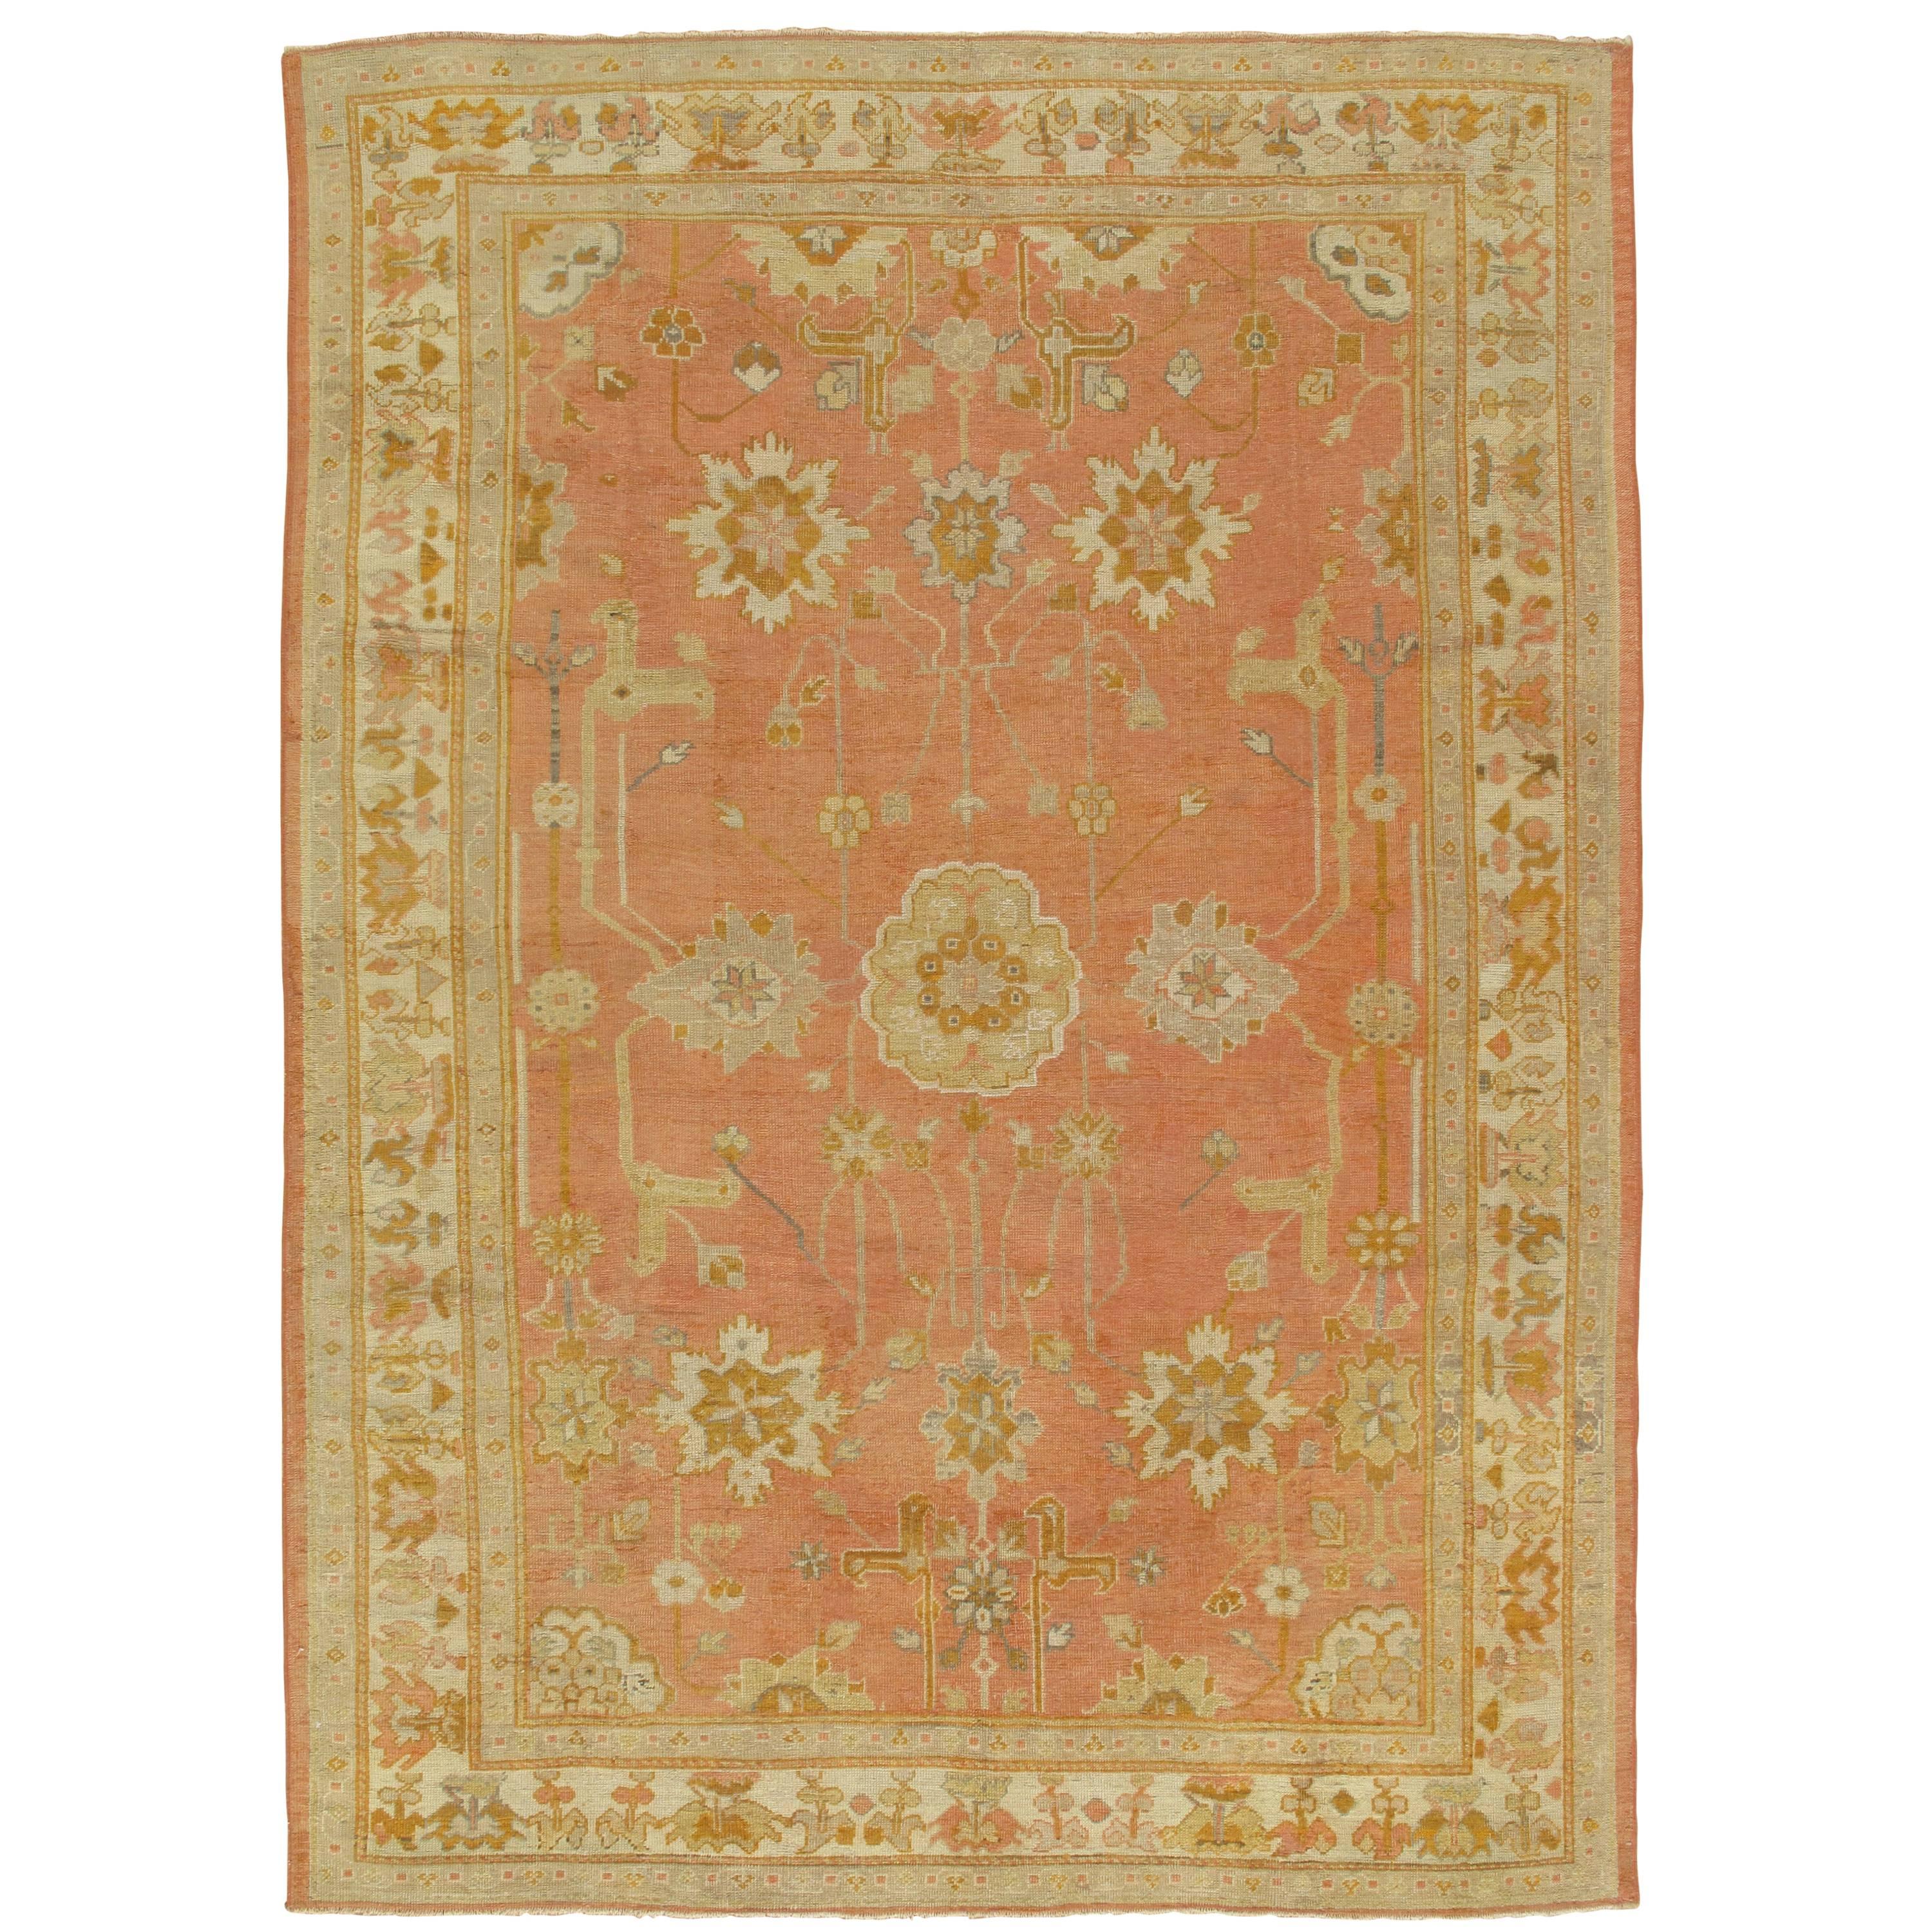 Antique Oushak Carpet, Handmade Oriental Rug, Pink Rug, Taupe, Cream Fine